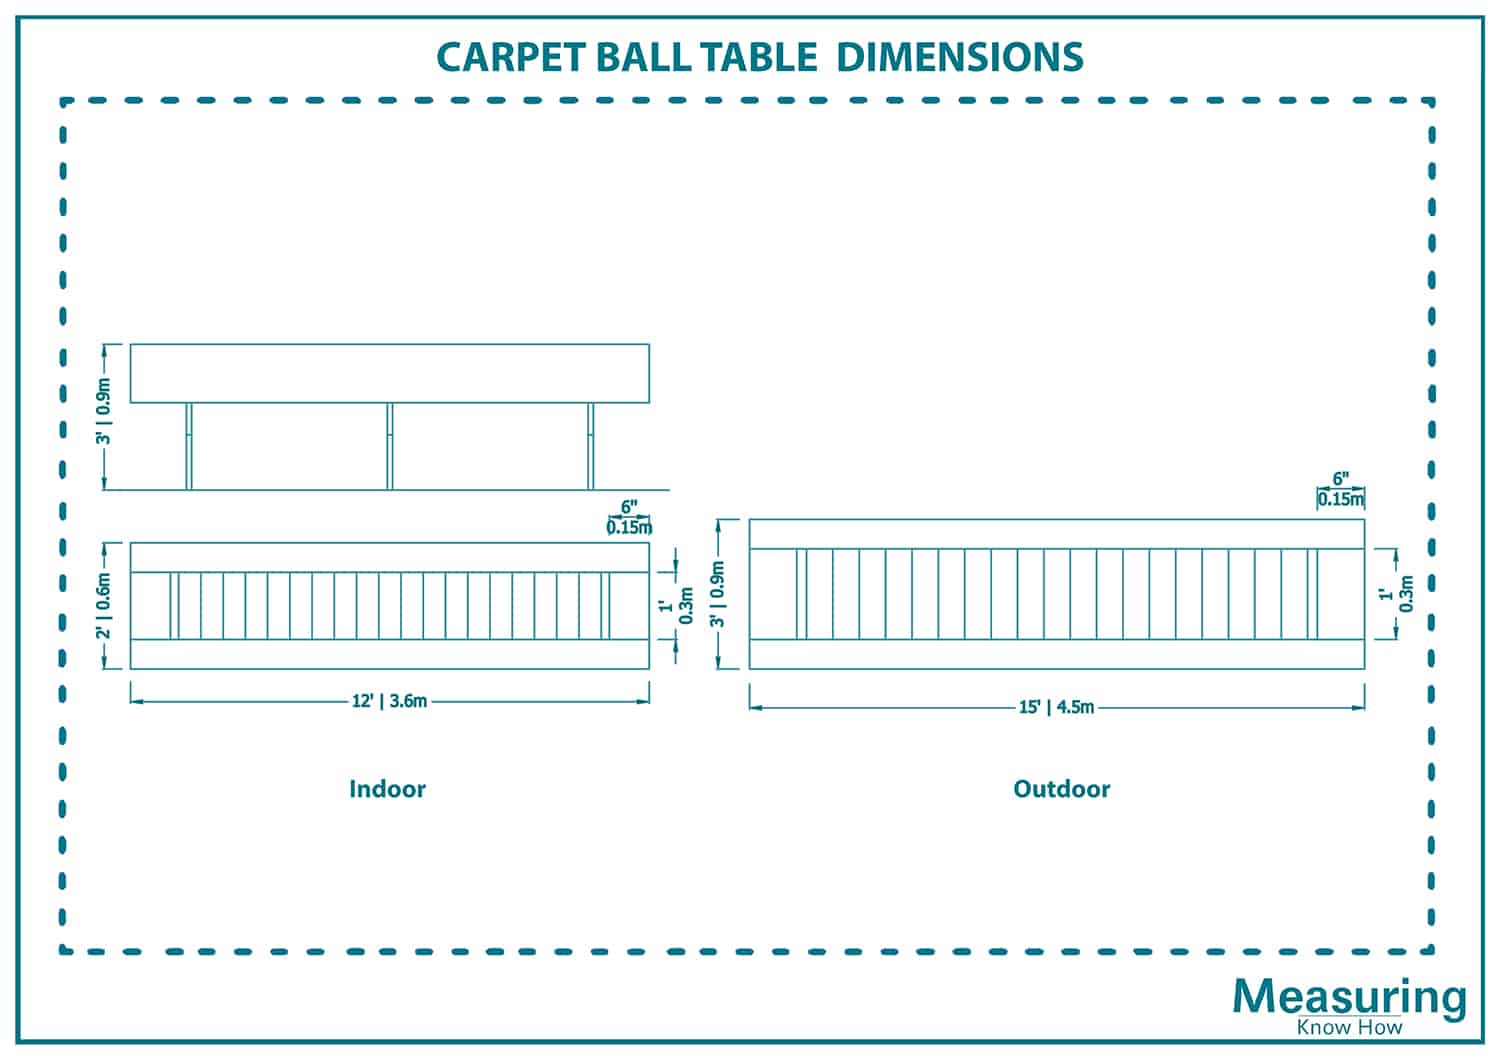 Carpet ball table dimensions